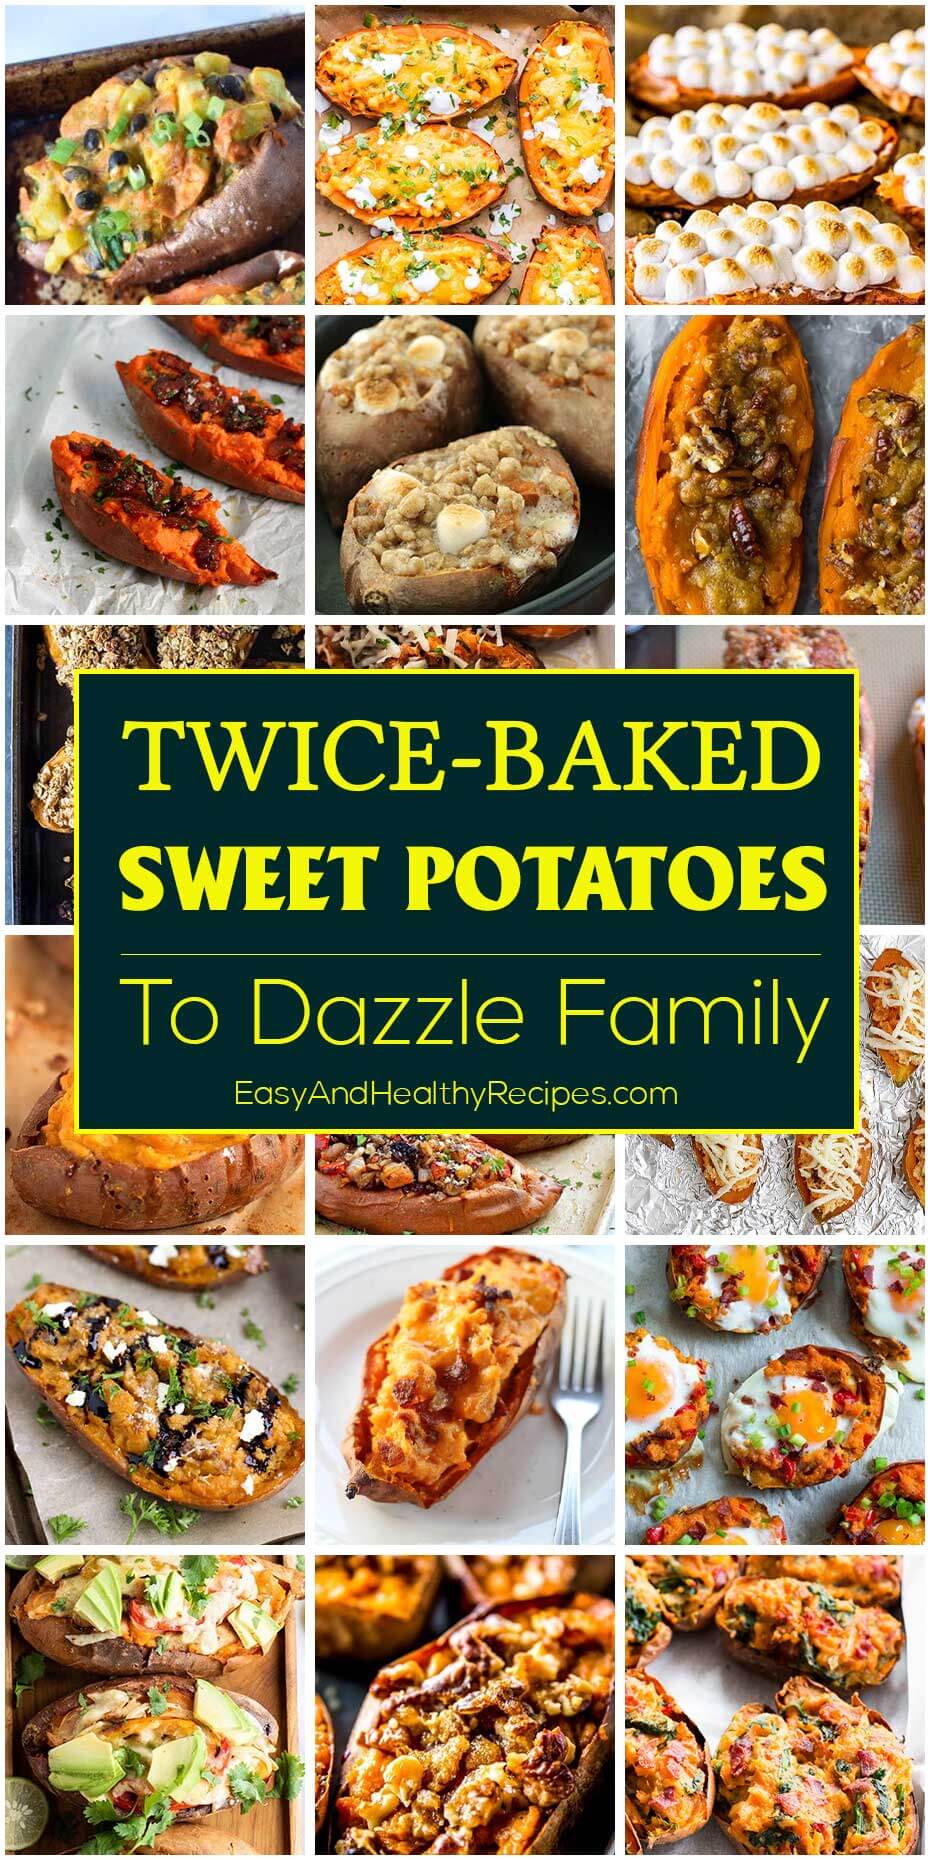 30 Best Ways To Make Twice-Baked Sweet Potatoes